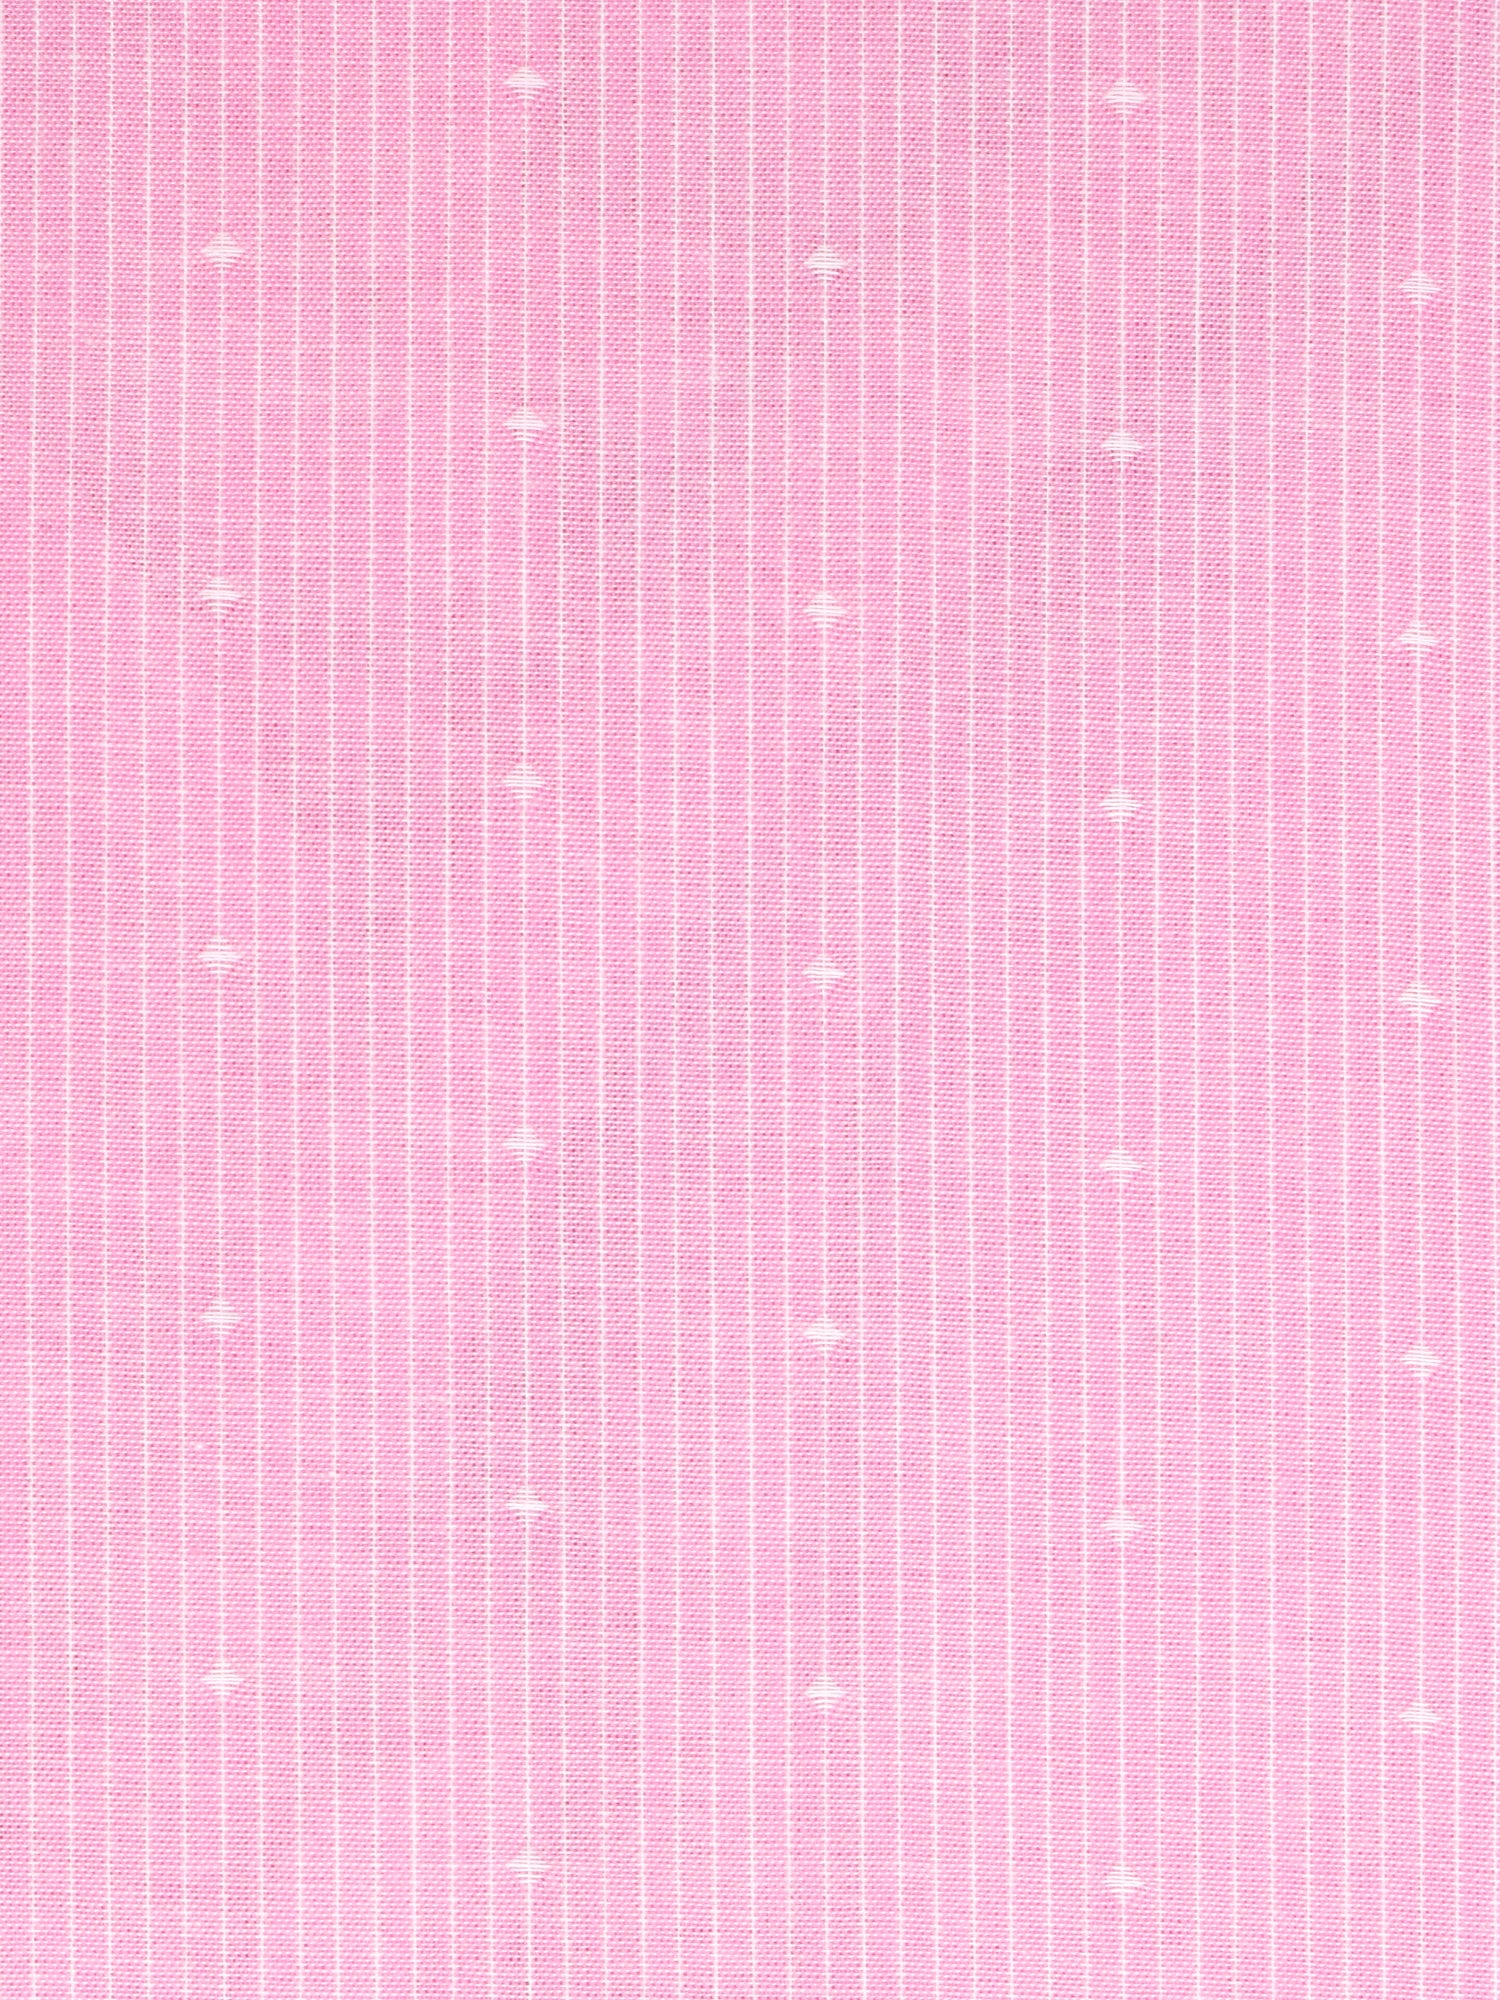 My Milestones Crib Sheet - Dots and Lines (Pink)